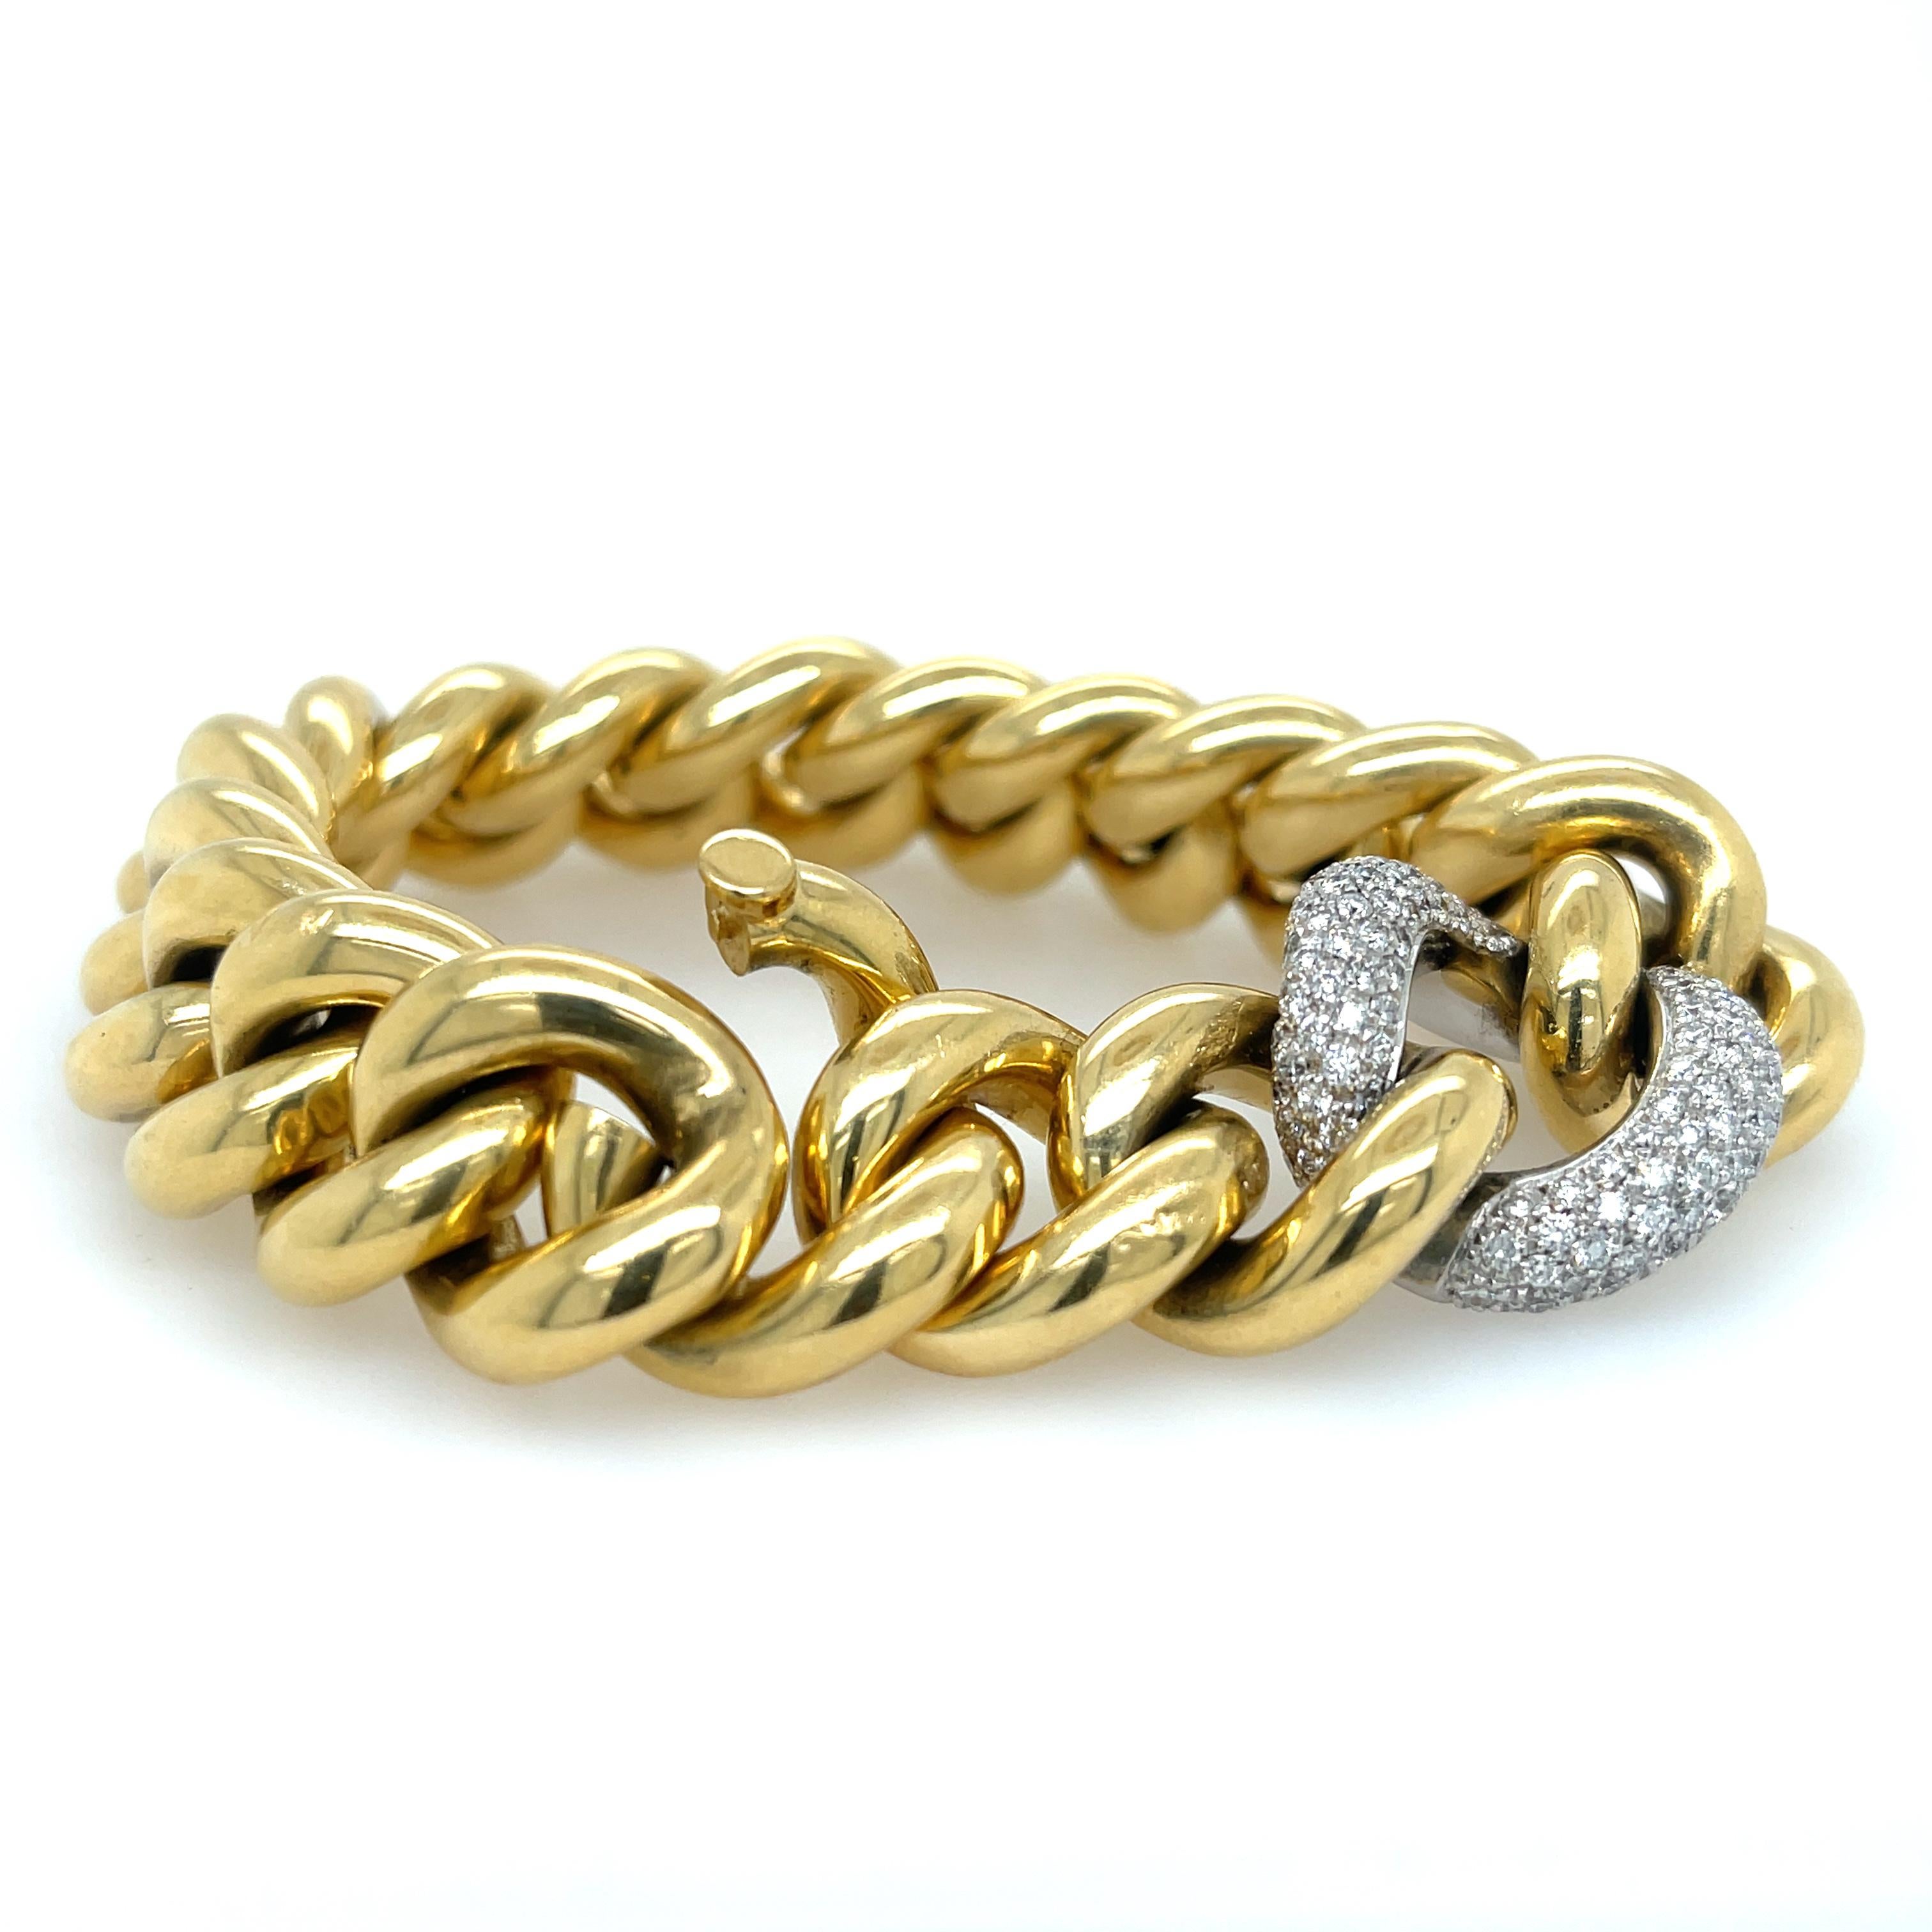 Diamond Curb Link Bracelet 18K Yellow Gold.
8.5